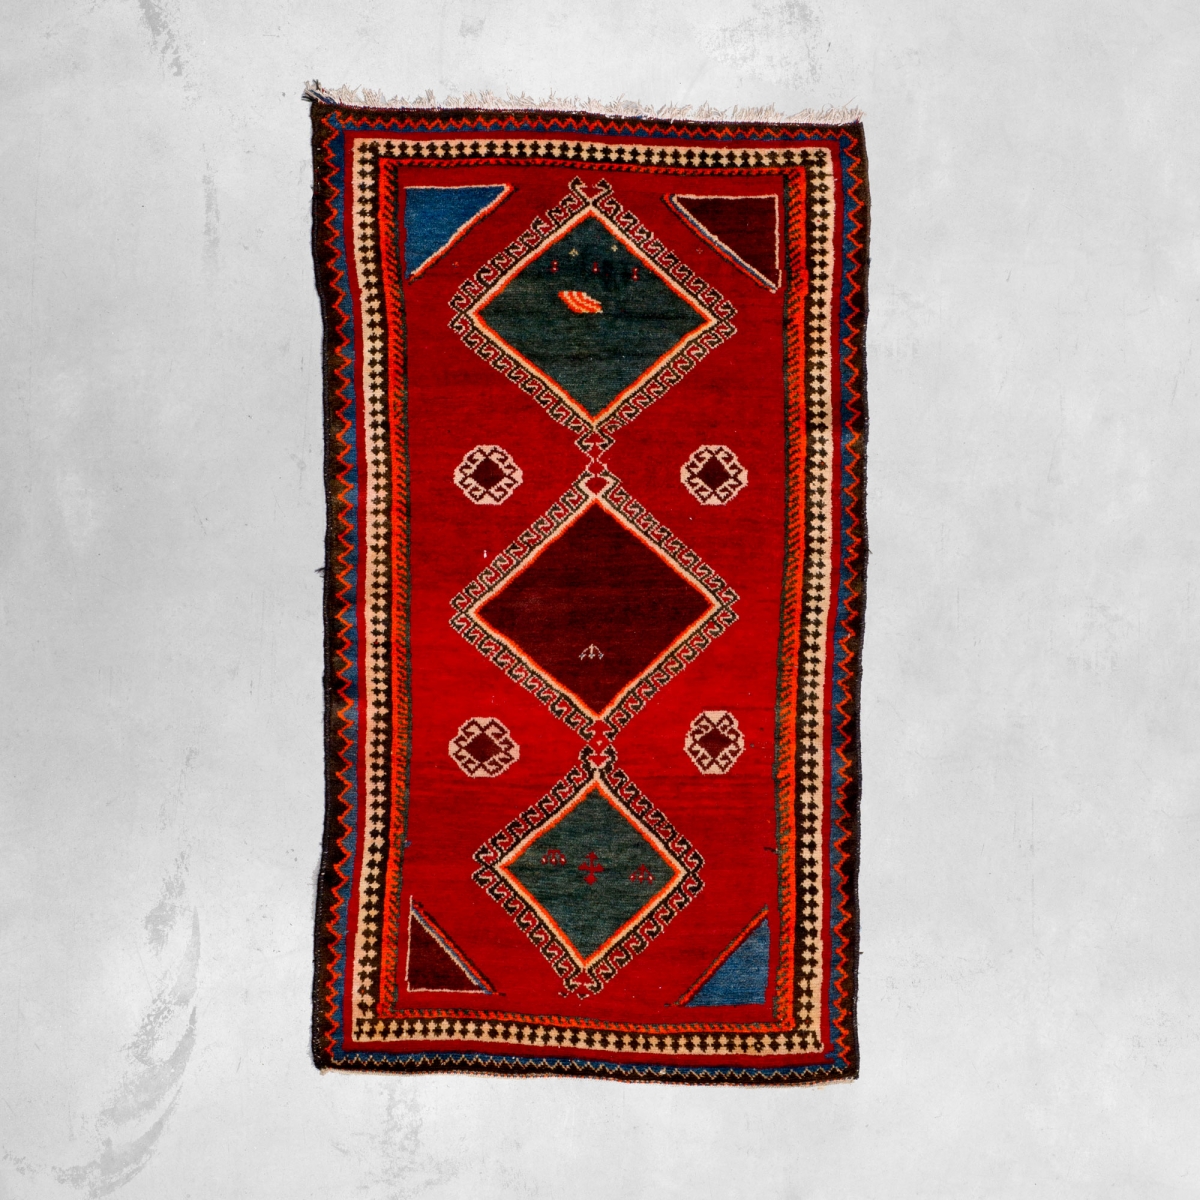  Tappeto Gabbeh | 206 x 122 cm Antique carpets - Persia  pic-1